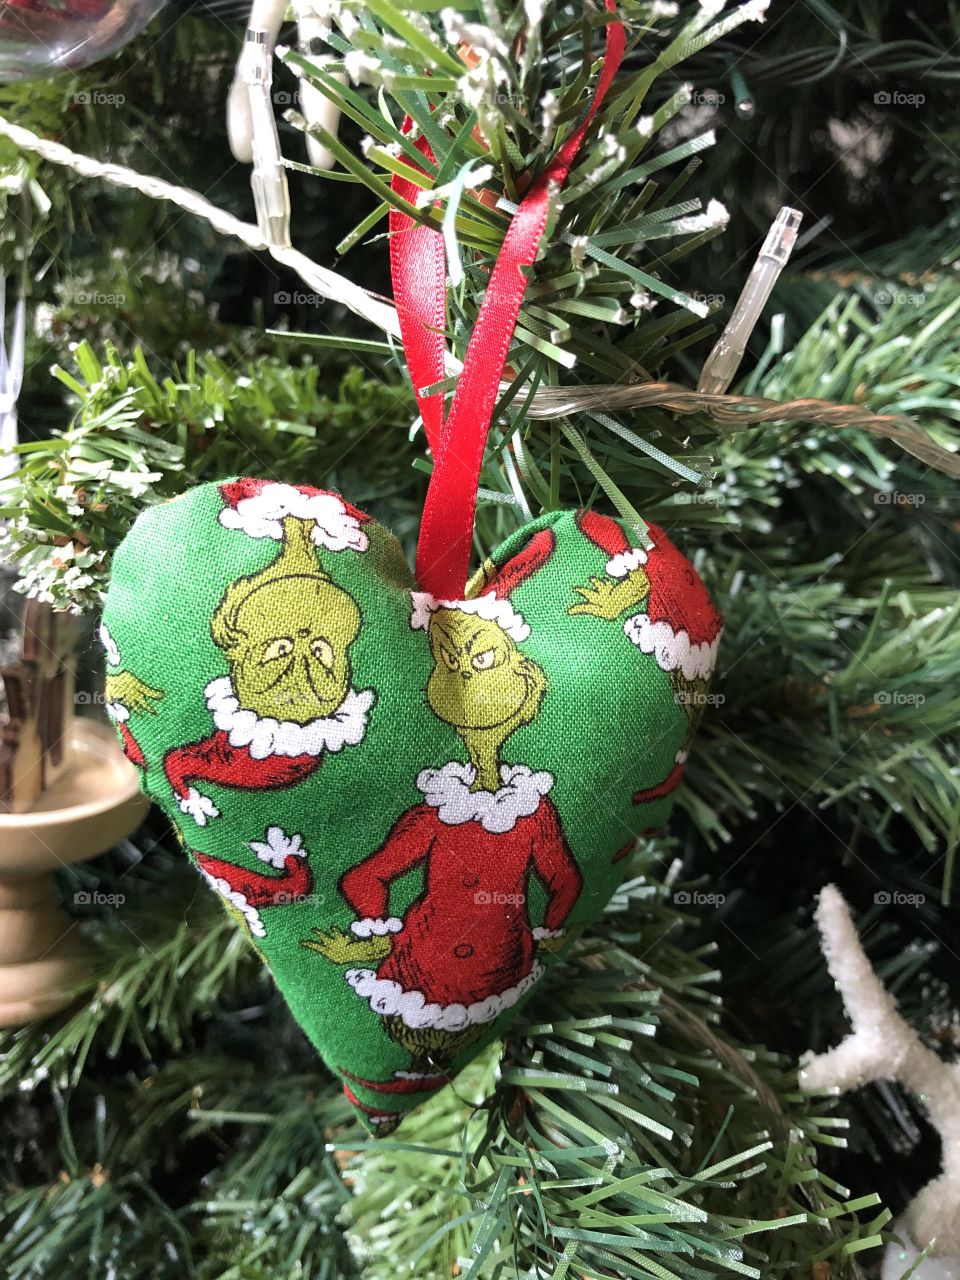 Mr grinch Christmas tree decoration 